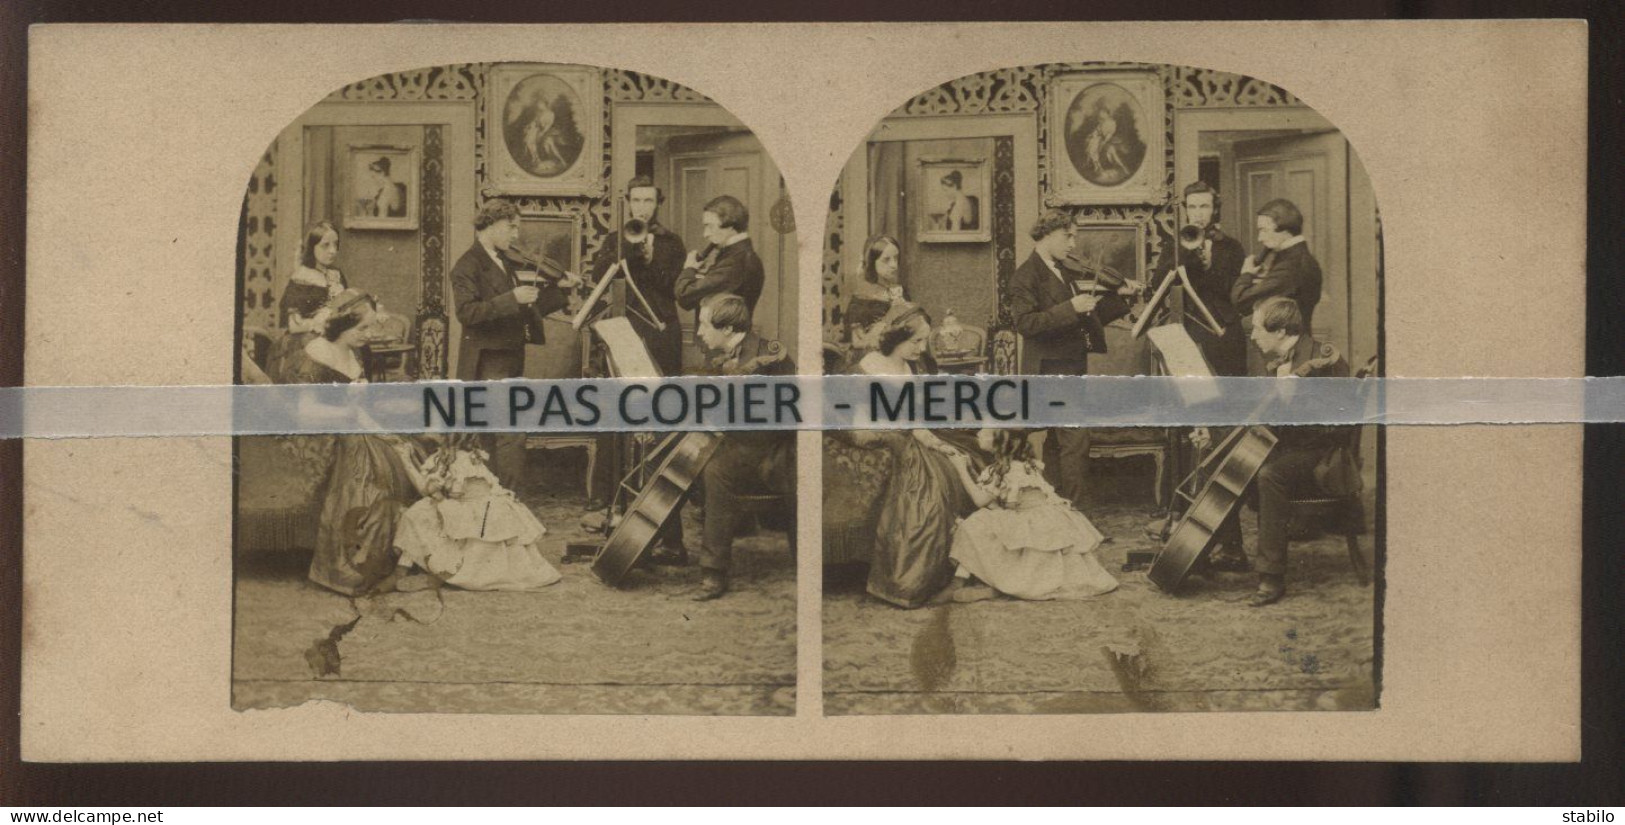 PHOTO STEREO - CABINET DE MUSIQUE EN 1860 - Stereoscopic